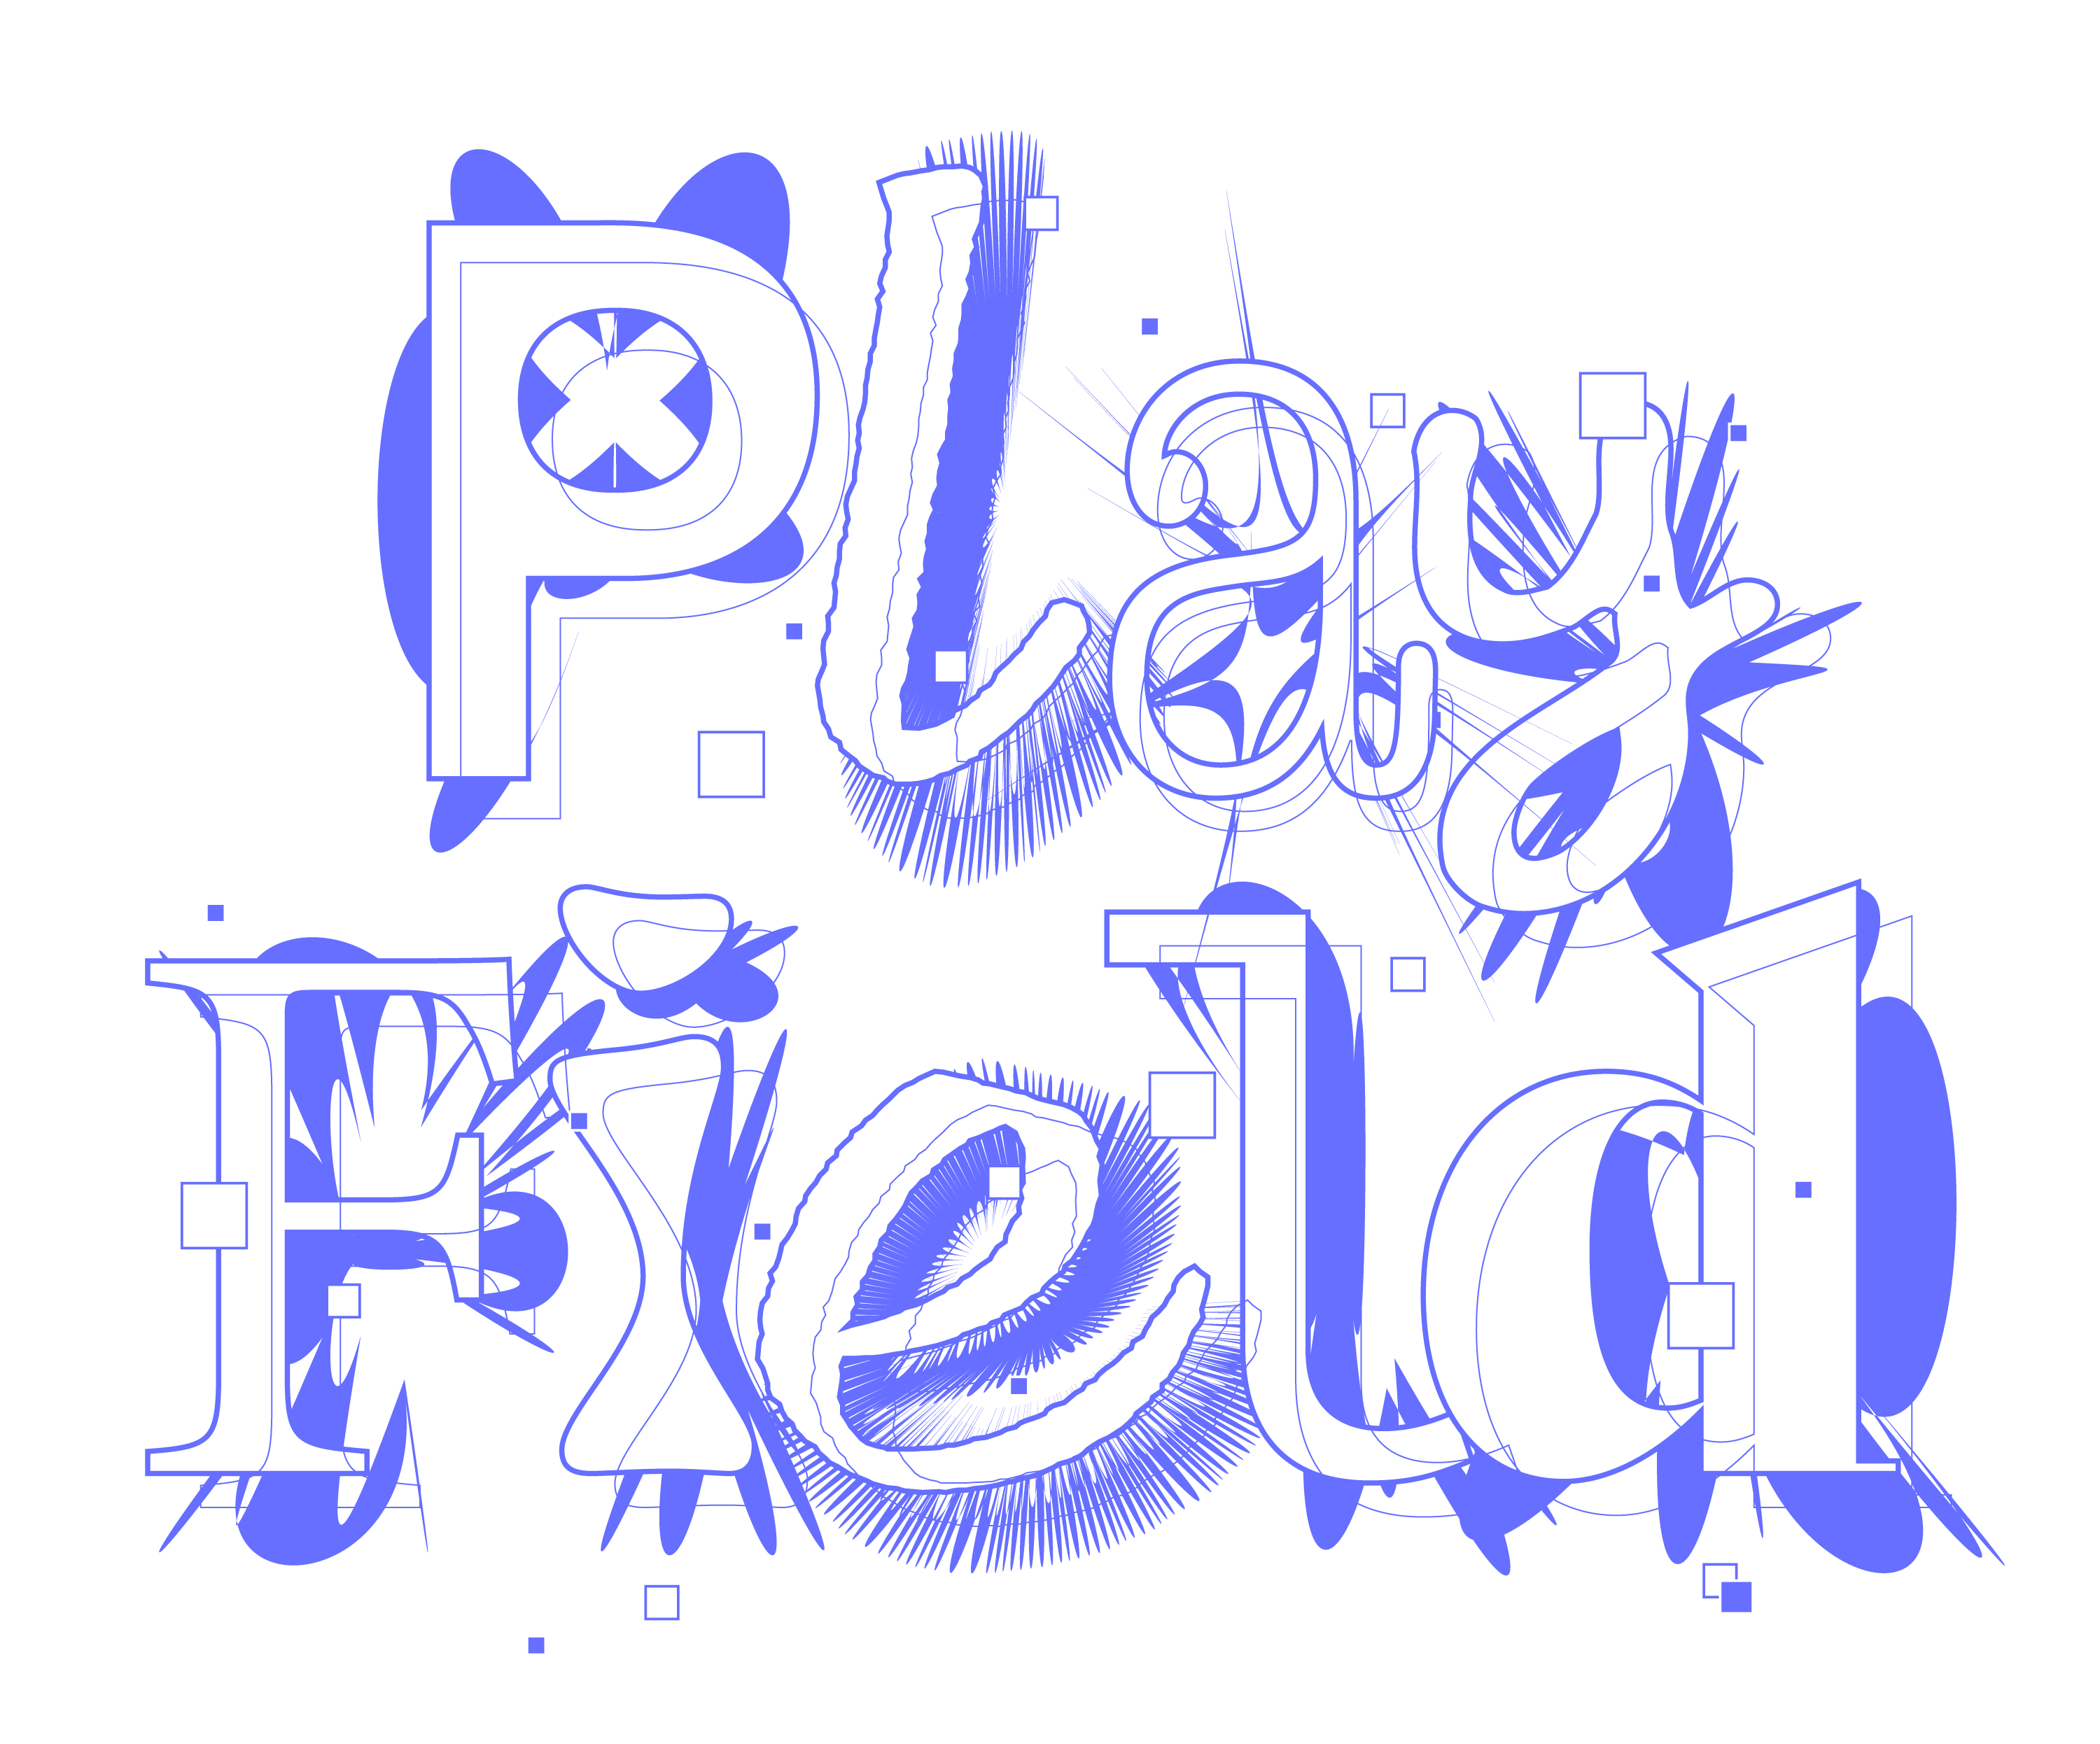 Playfield Wordmark - funky lettering that says "Playfield"